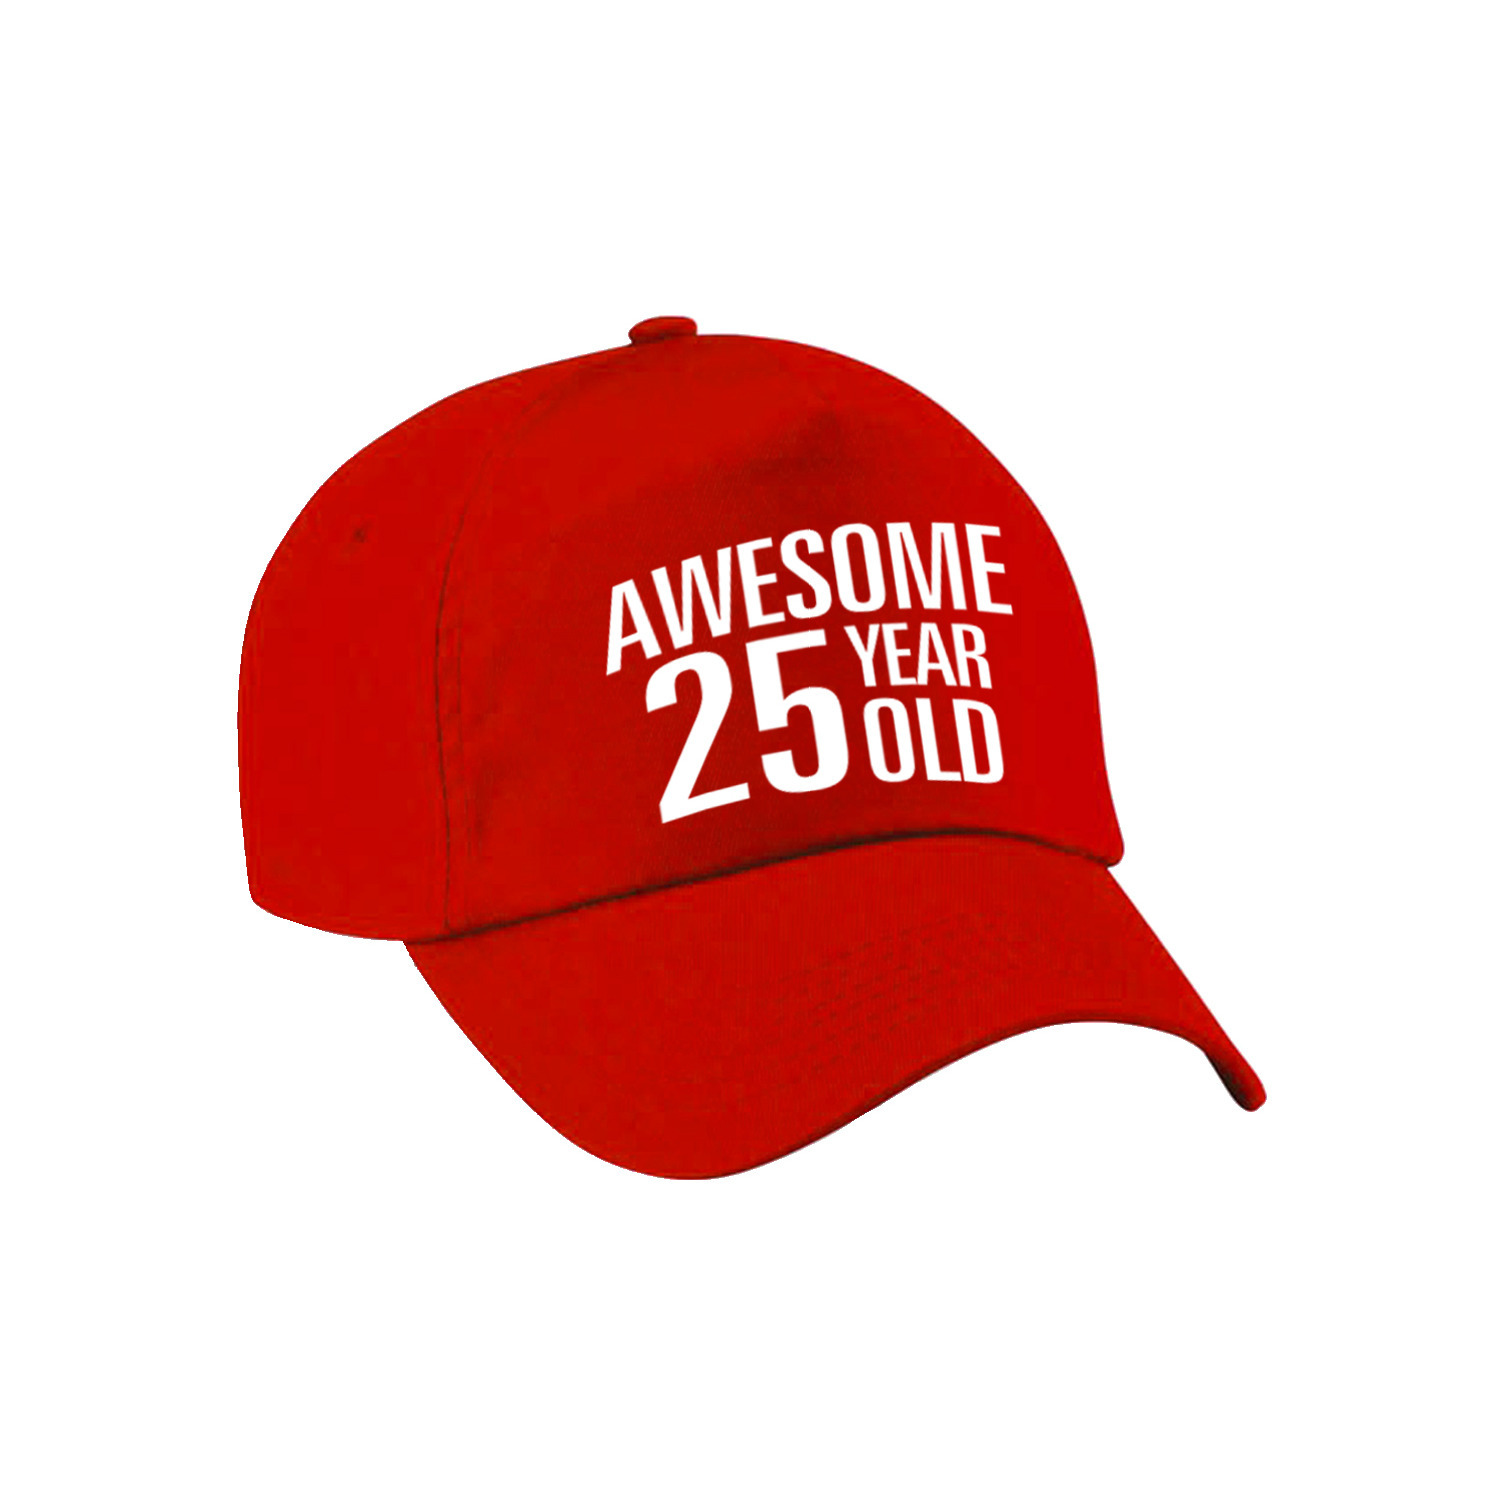 Awesome 25 year old verjaardag pet / cap rood voor dames en heren